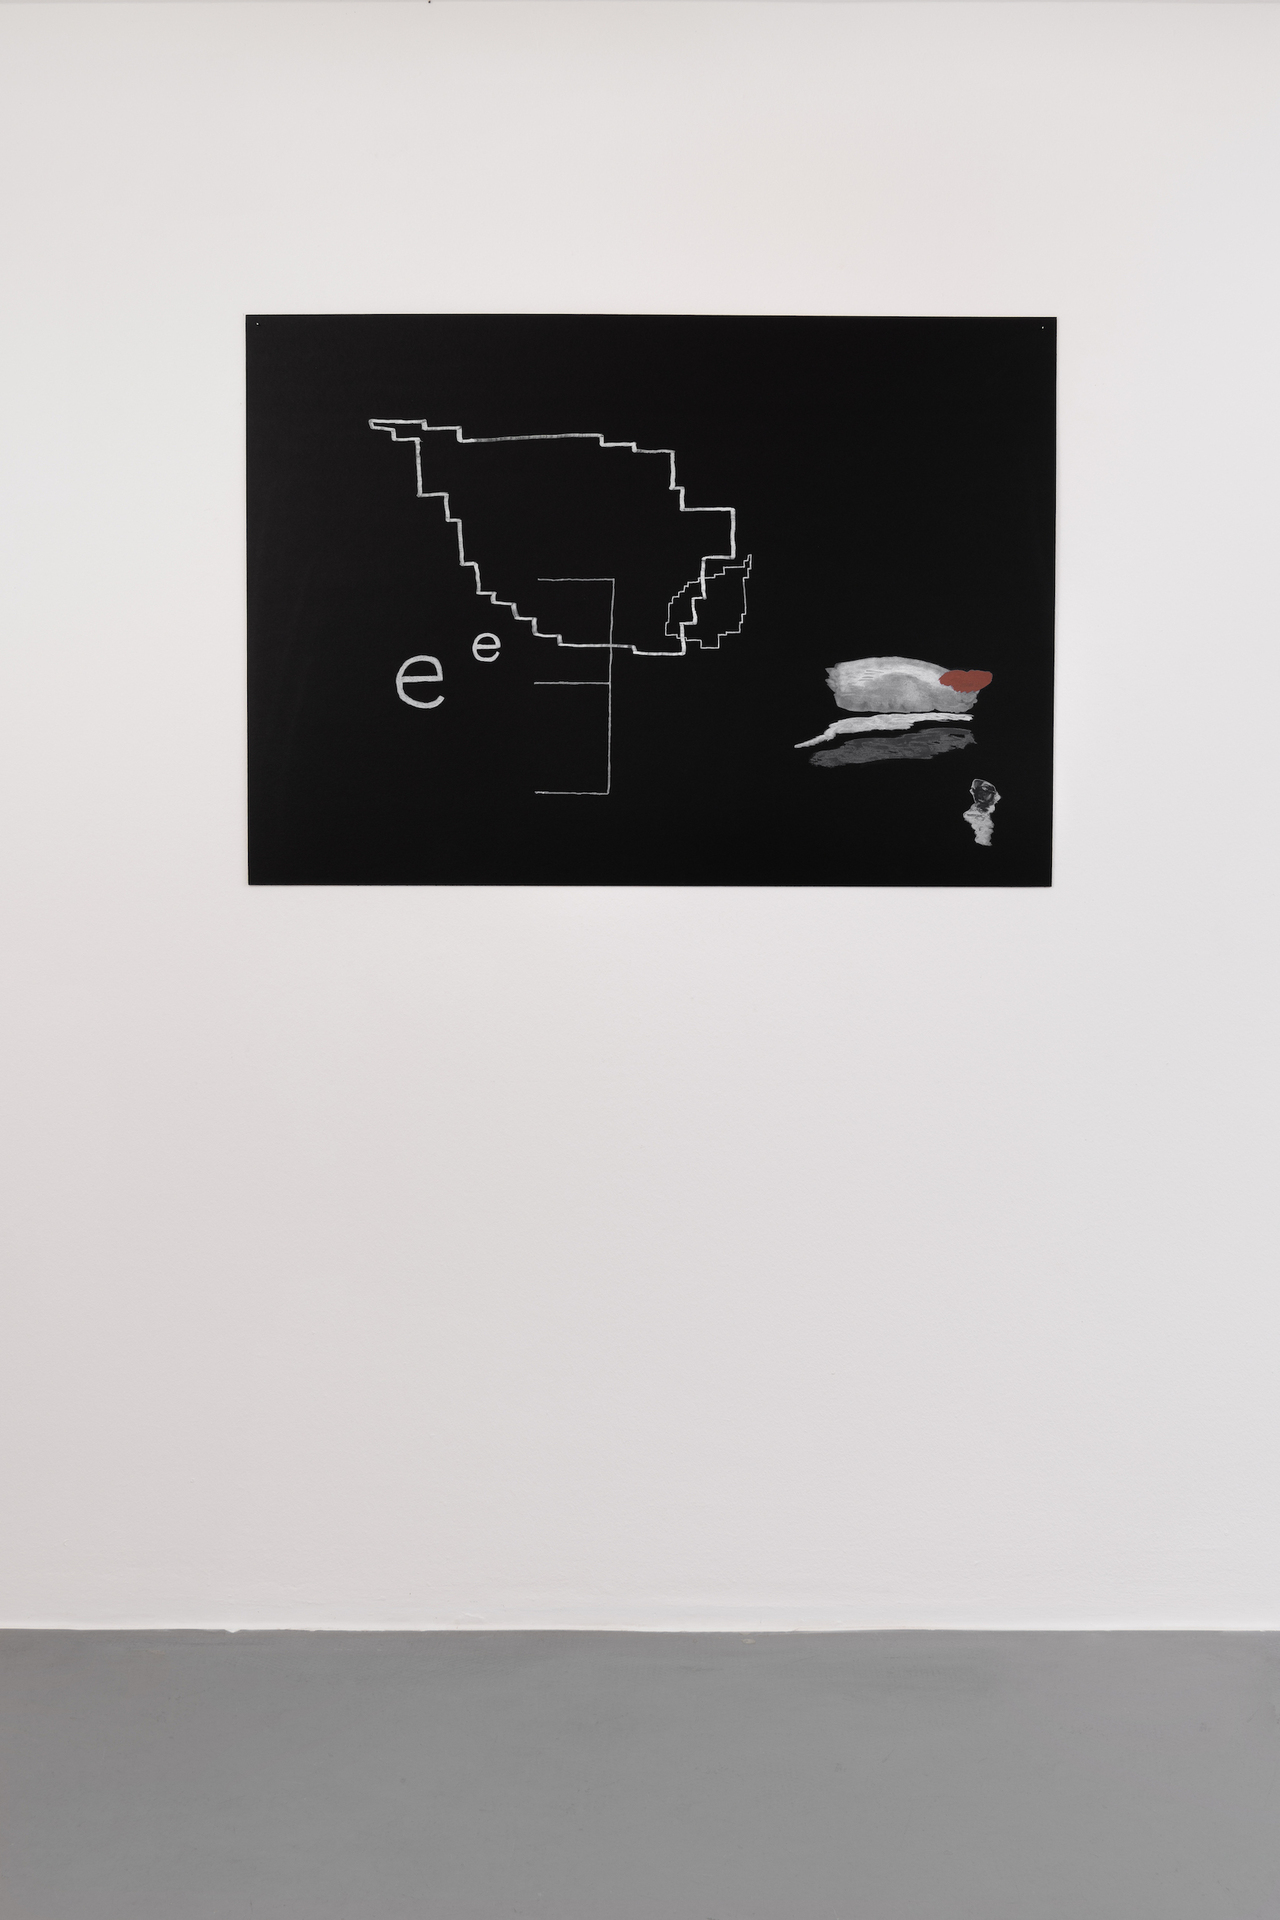 Arian de Vette, “eeE”, 2021, UV print on cardboard, 75 x 100 cm